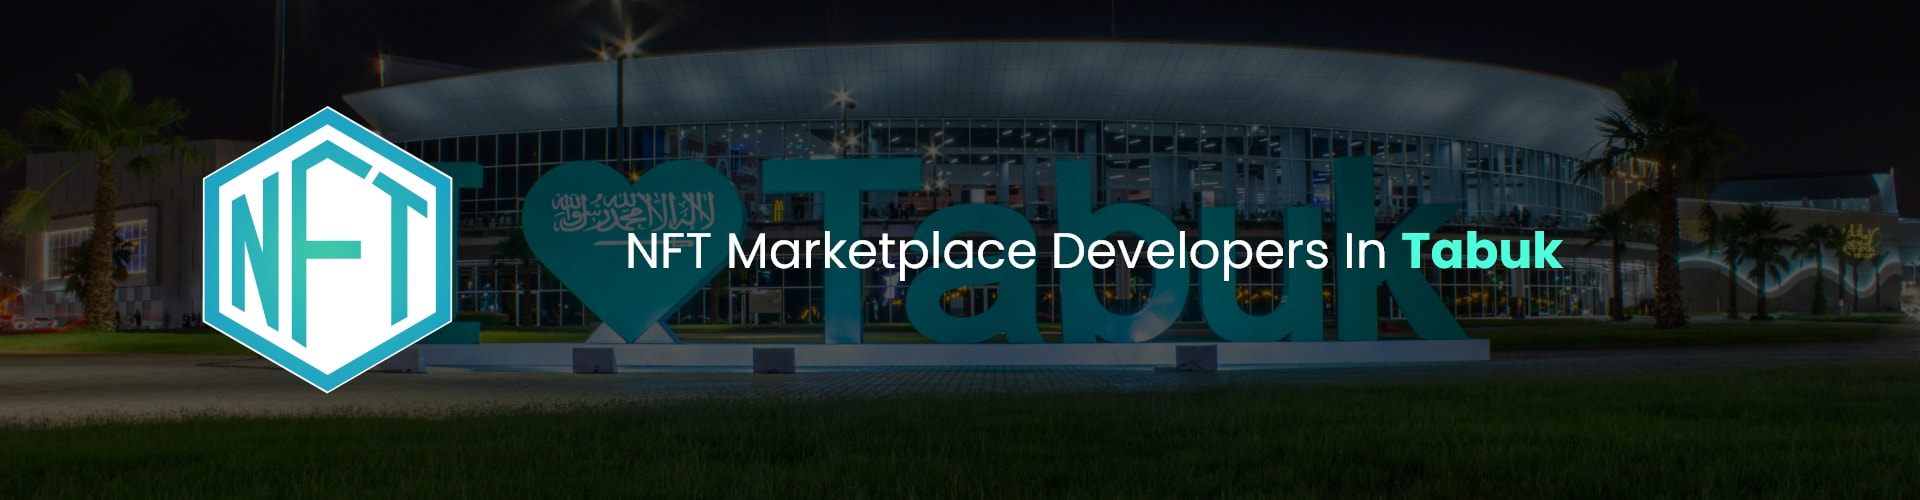 hire nft marketplace developers in Tabuk